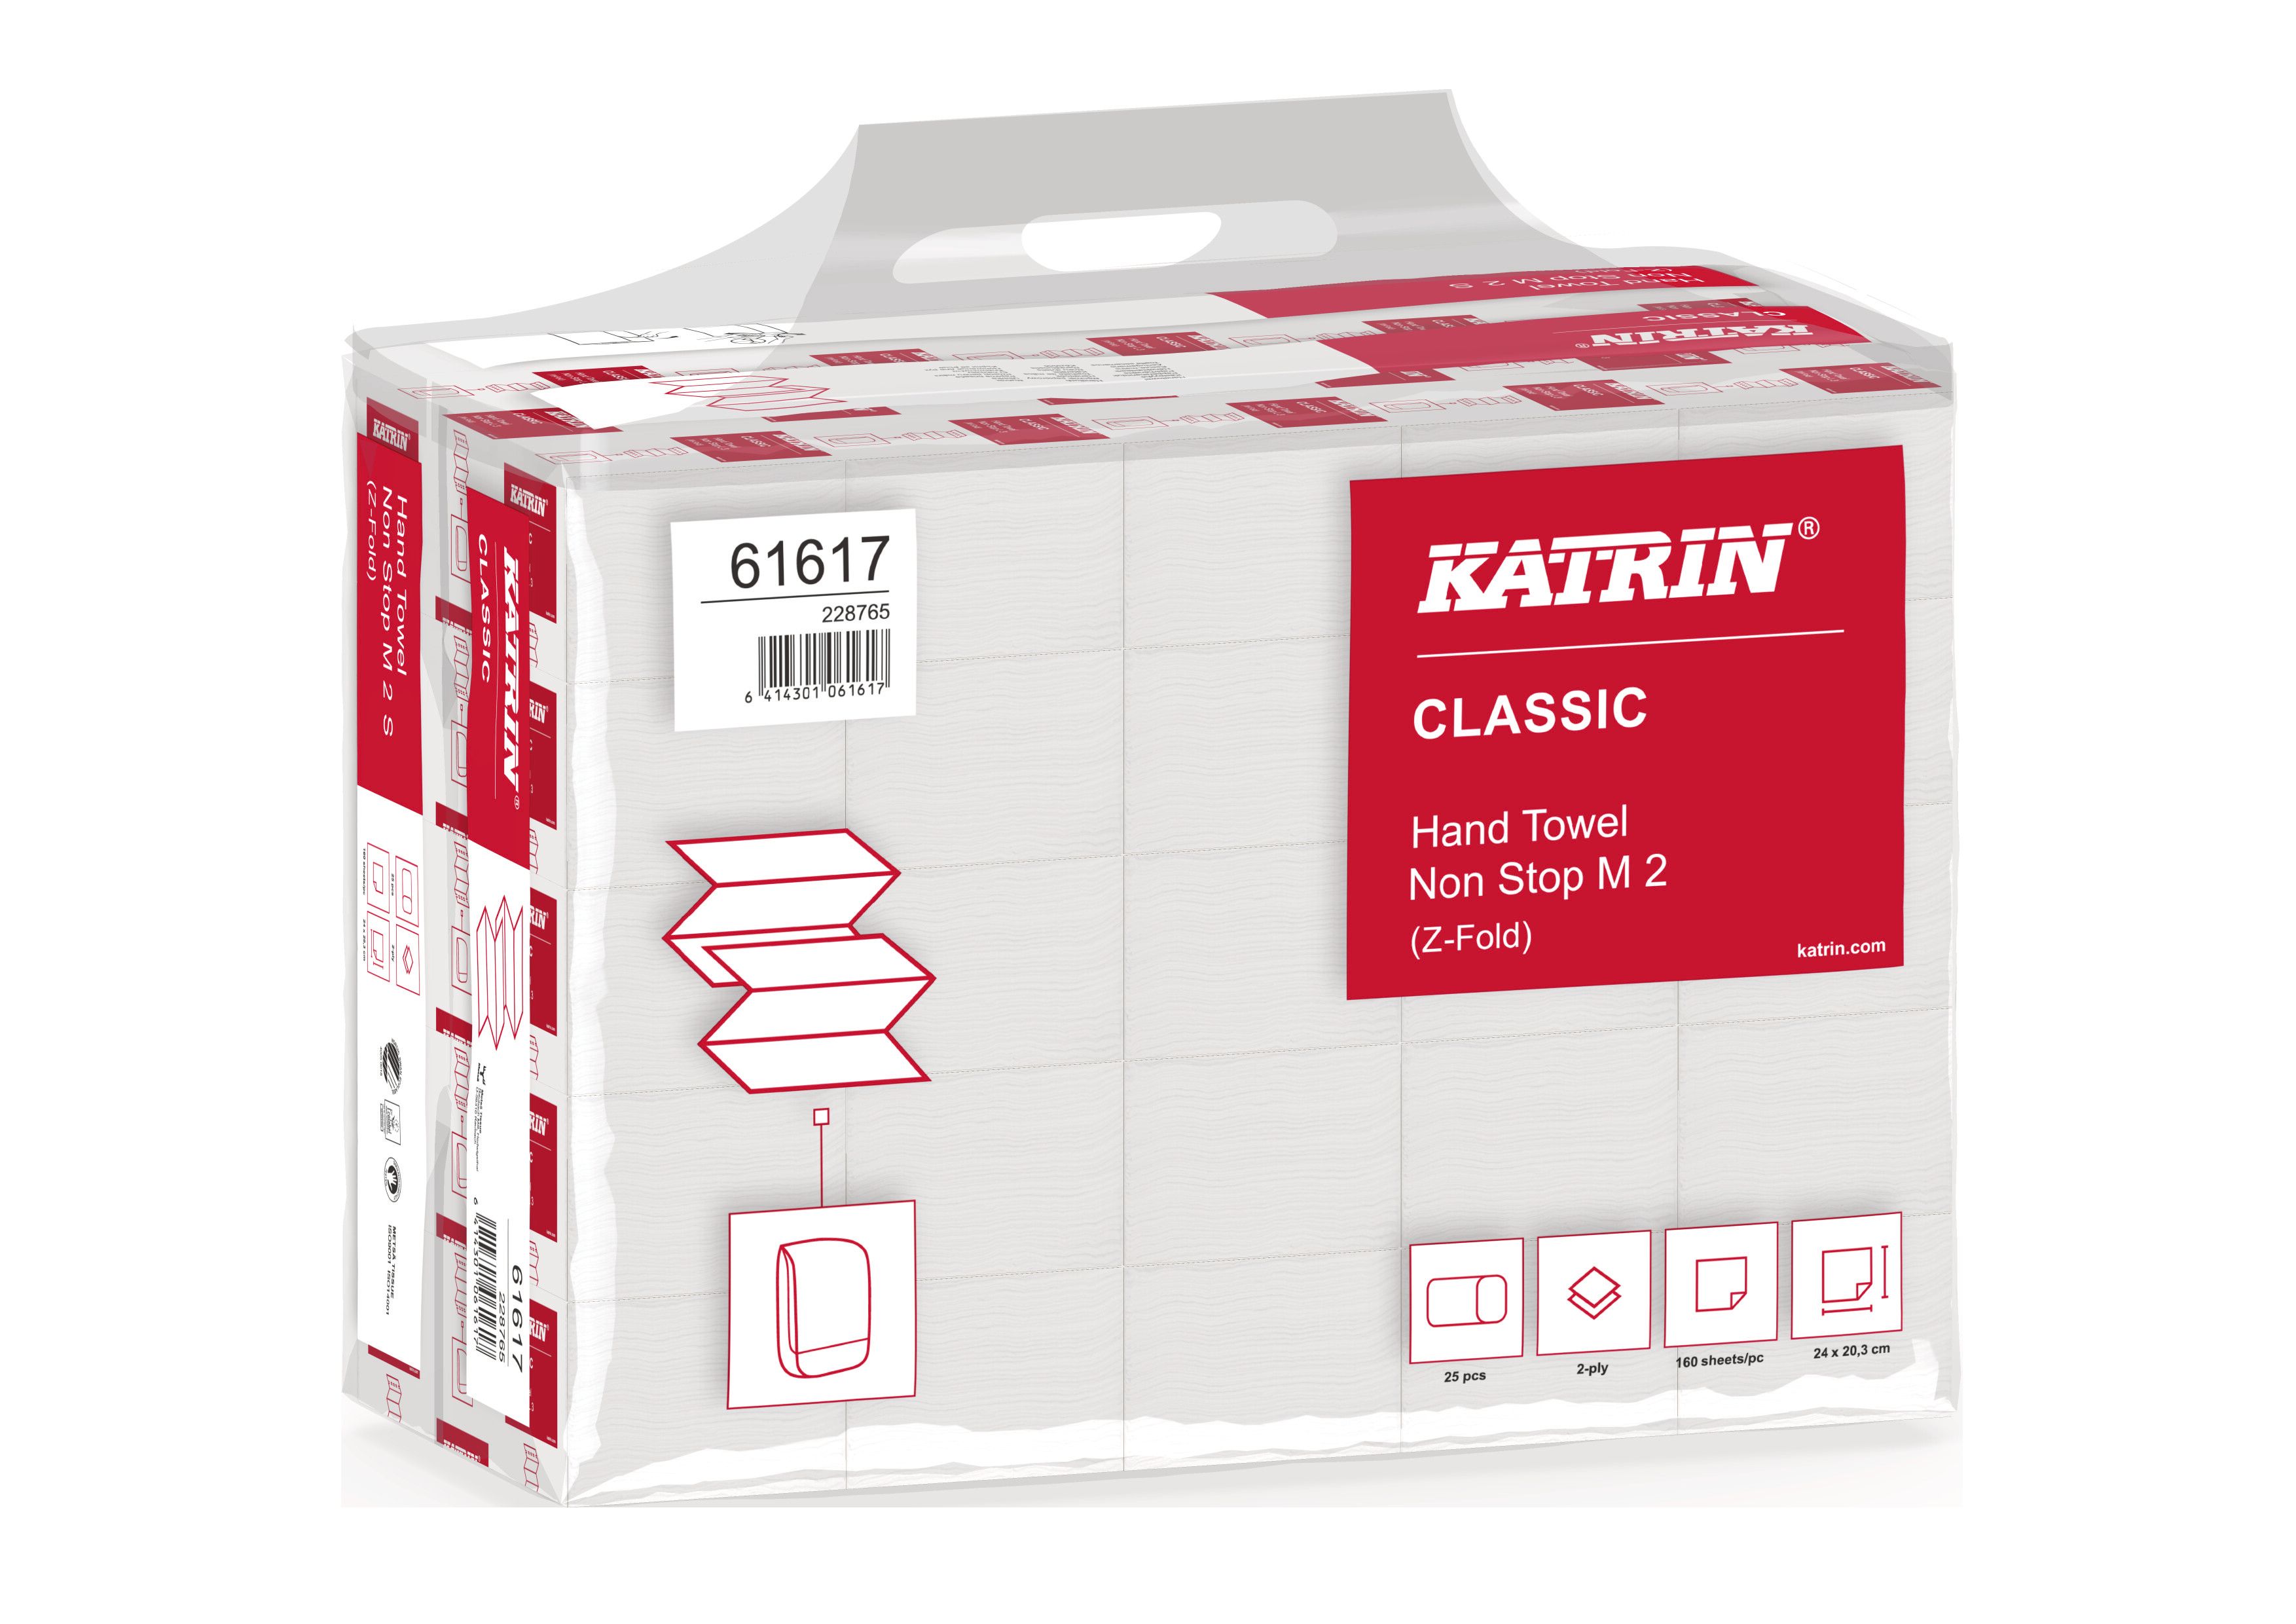 * Katrin Classic Nonstop M2 H/Towel - 61617